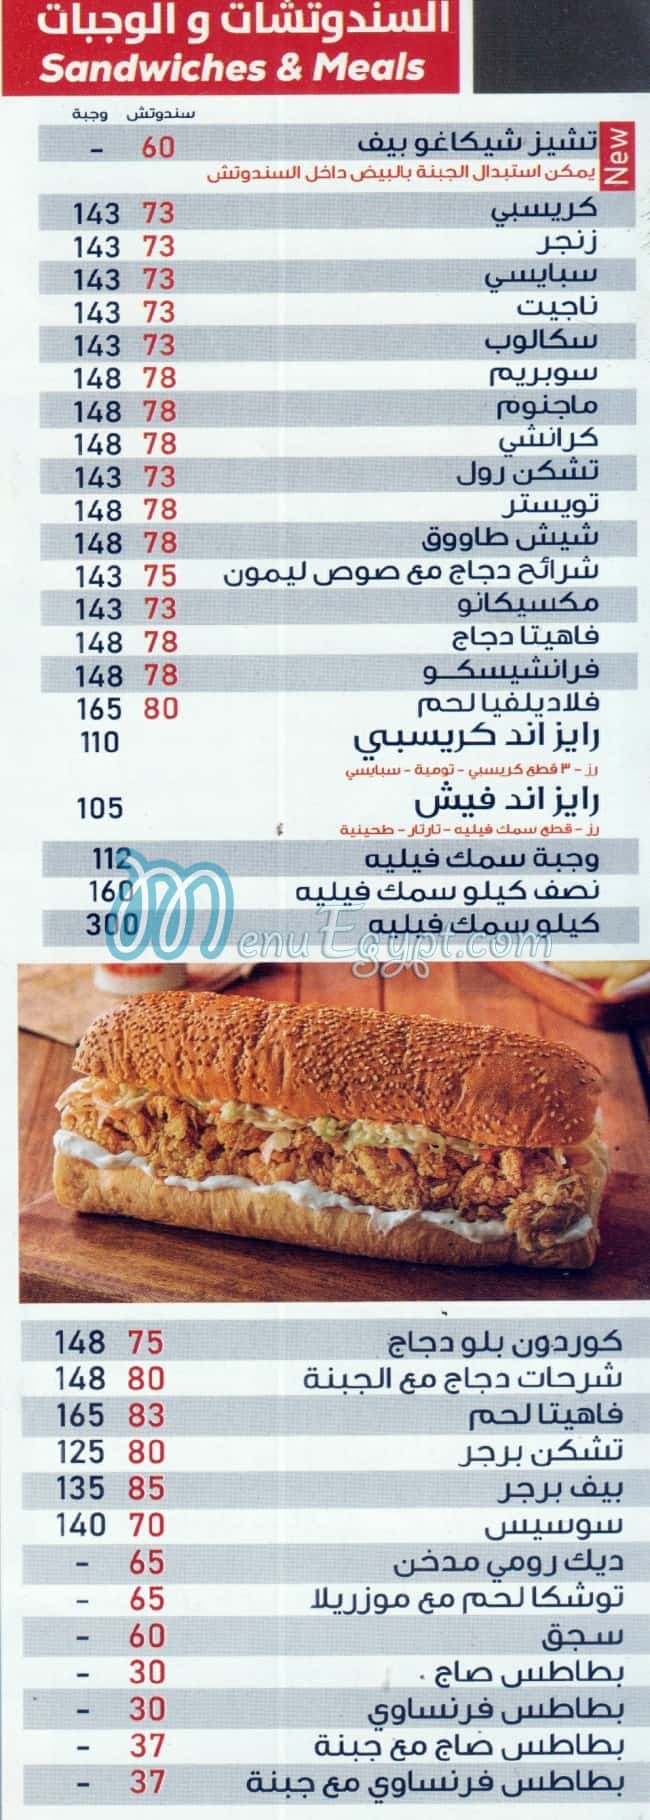 Chikno menu Egypt 2